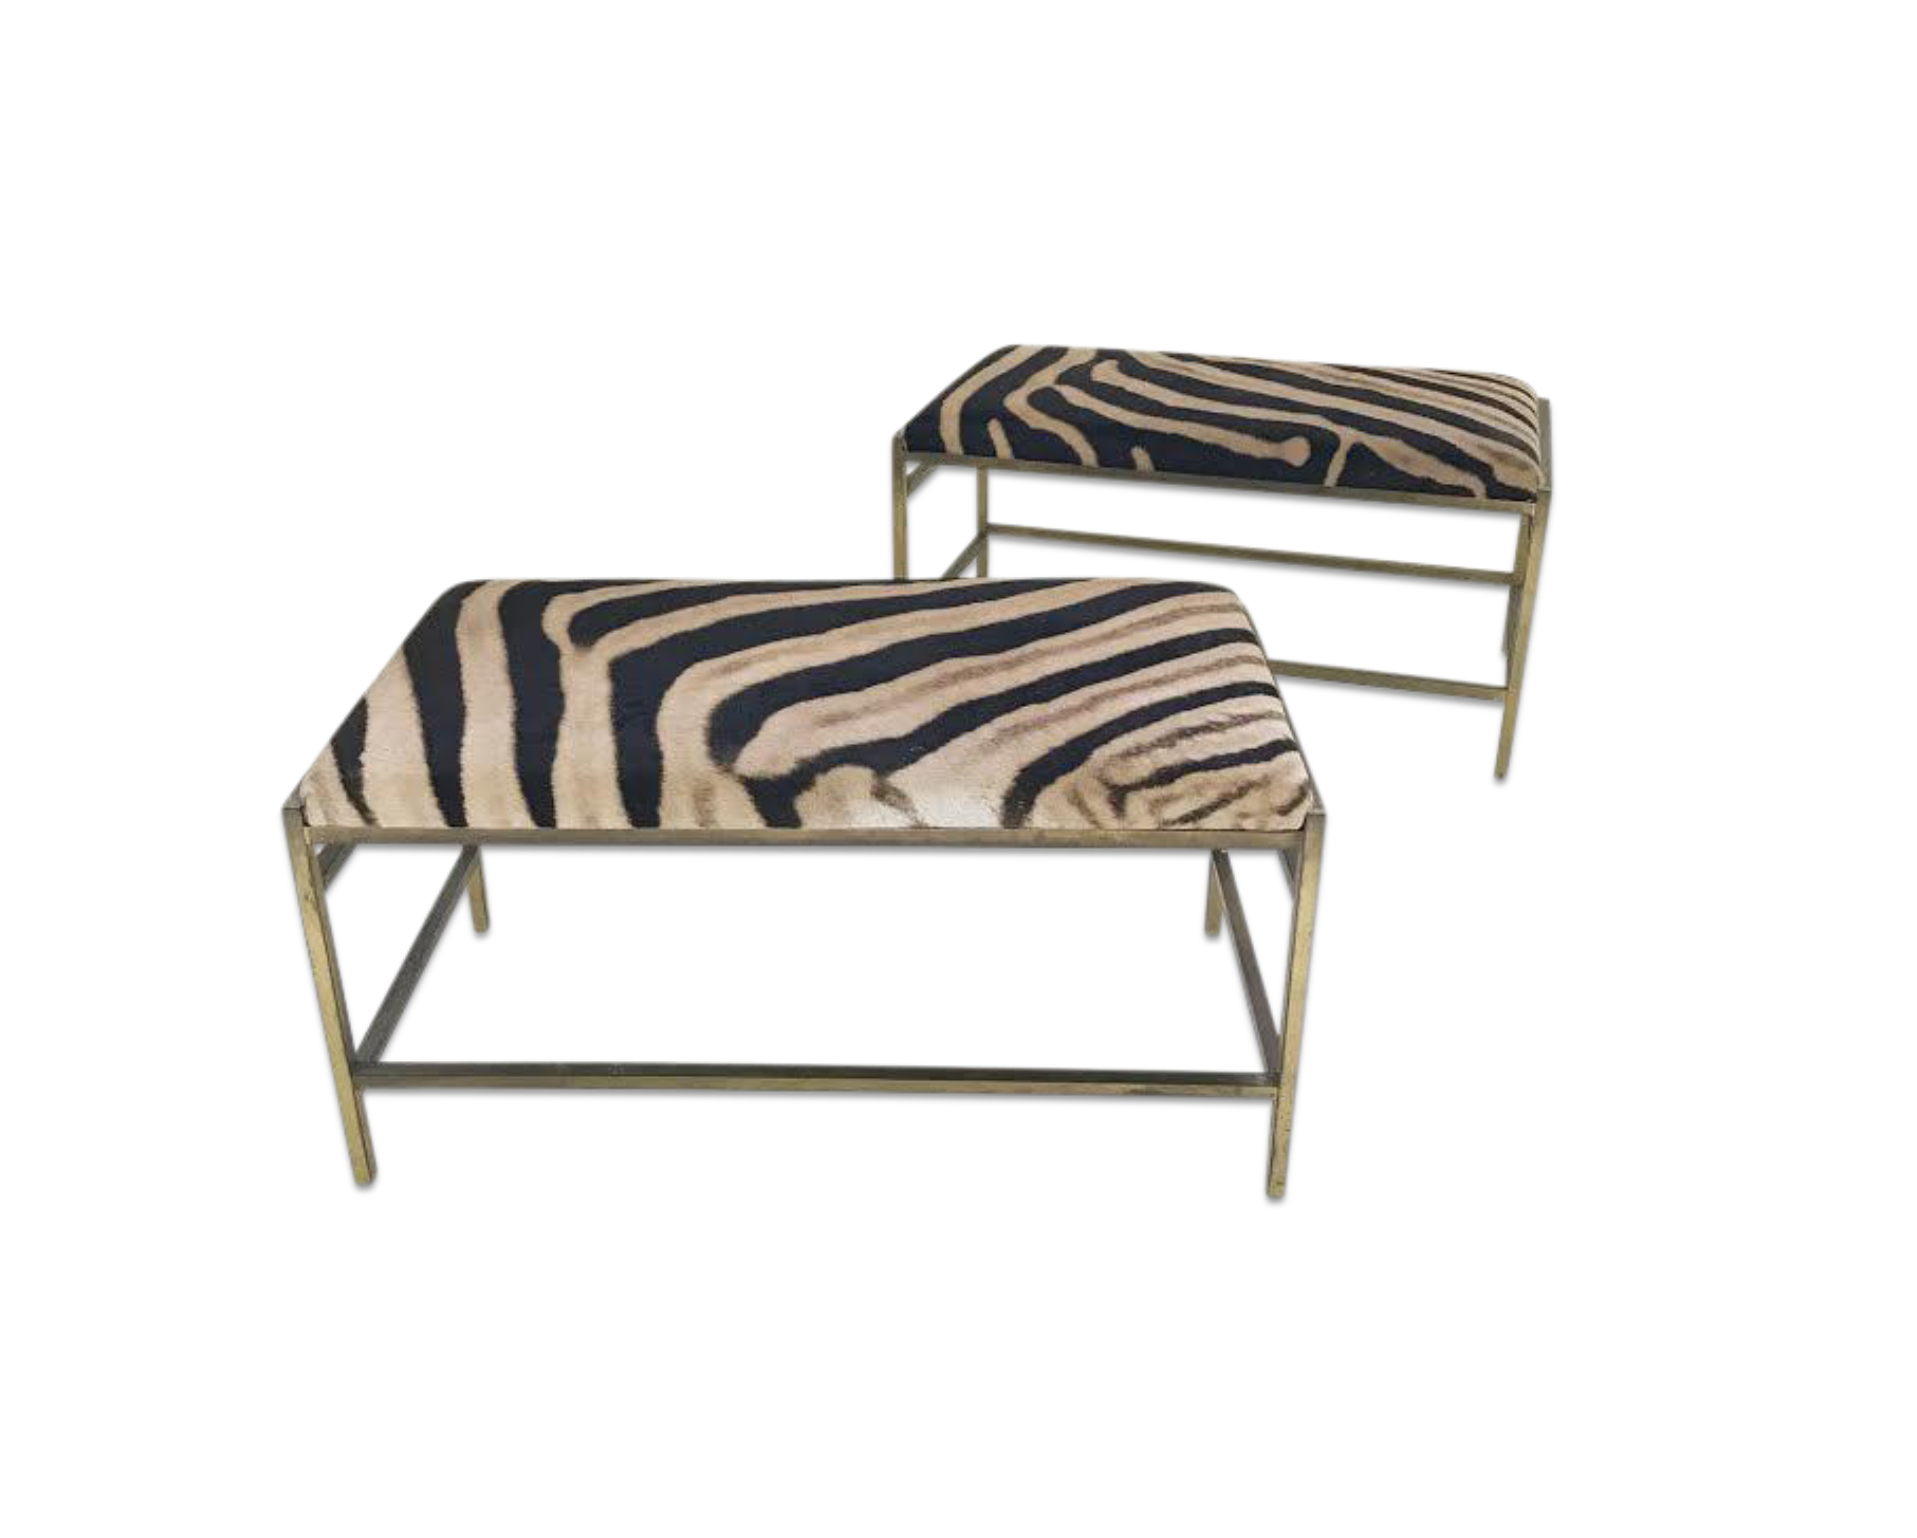 Brass Benches in Zebra Hide - FORSYTH